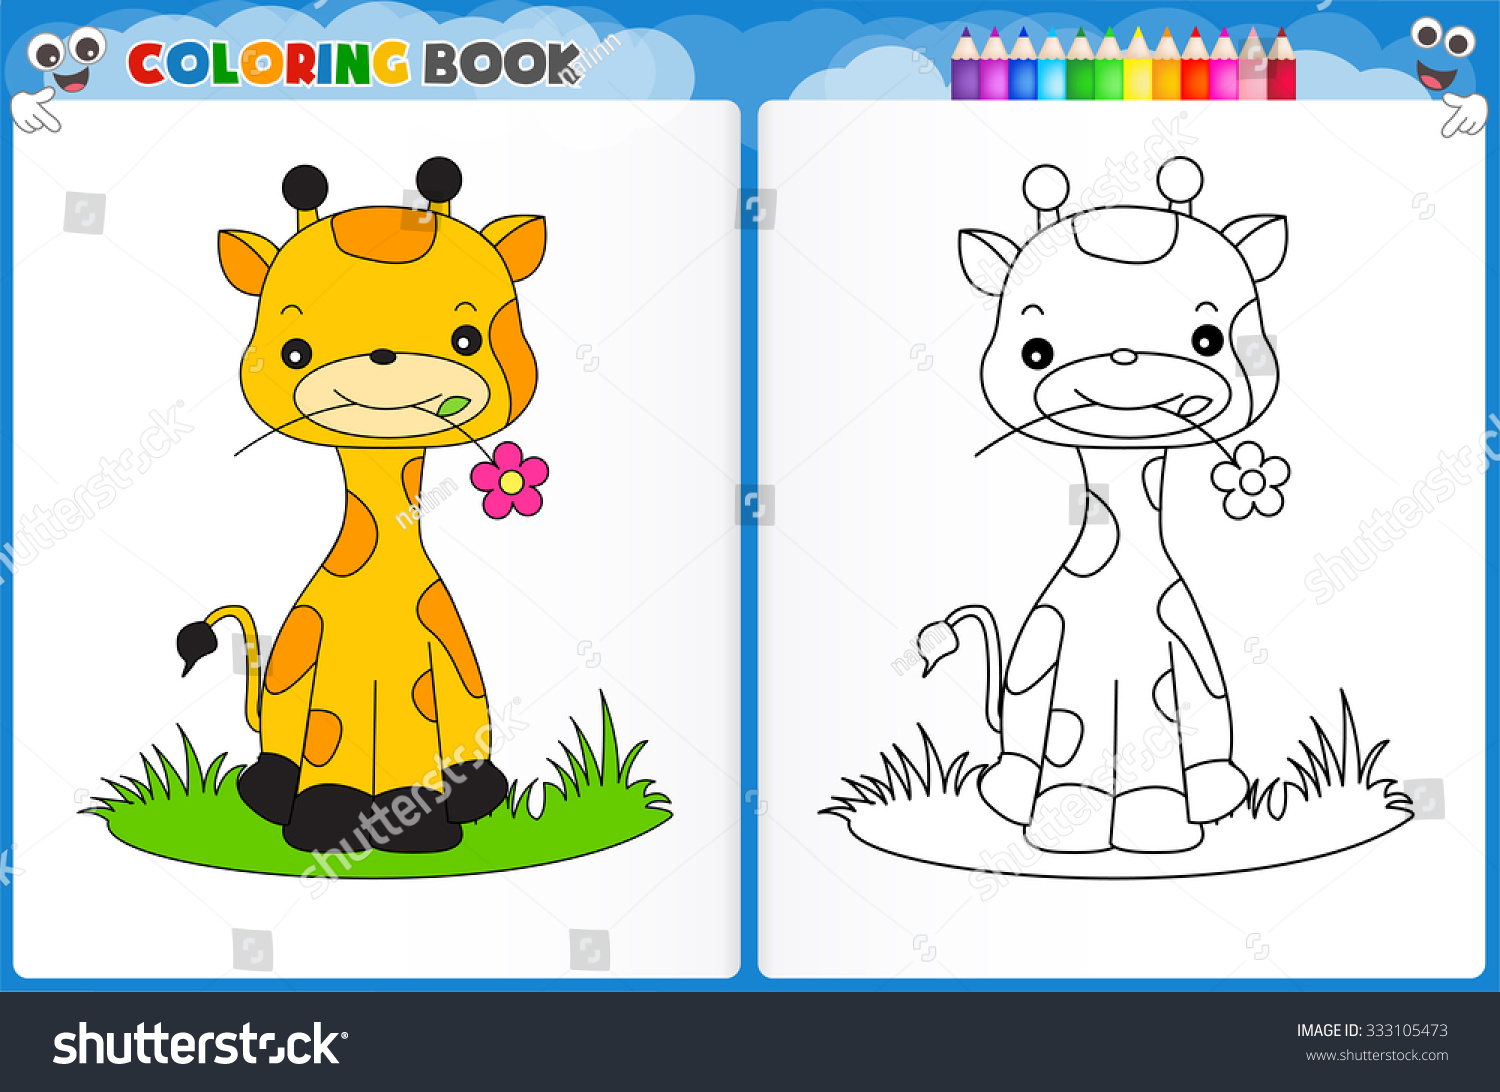 Coloring Page Cute Giraffe Colorful Sample Stock Illustration ...